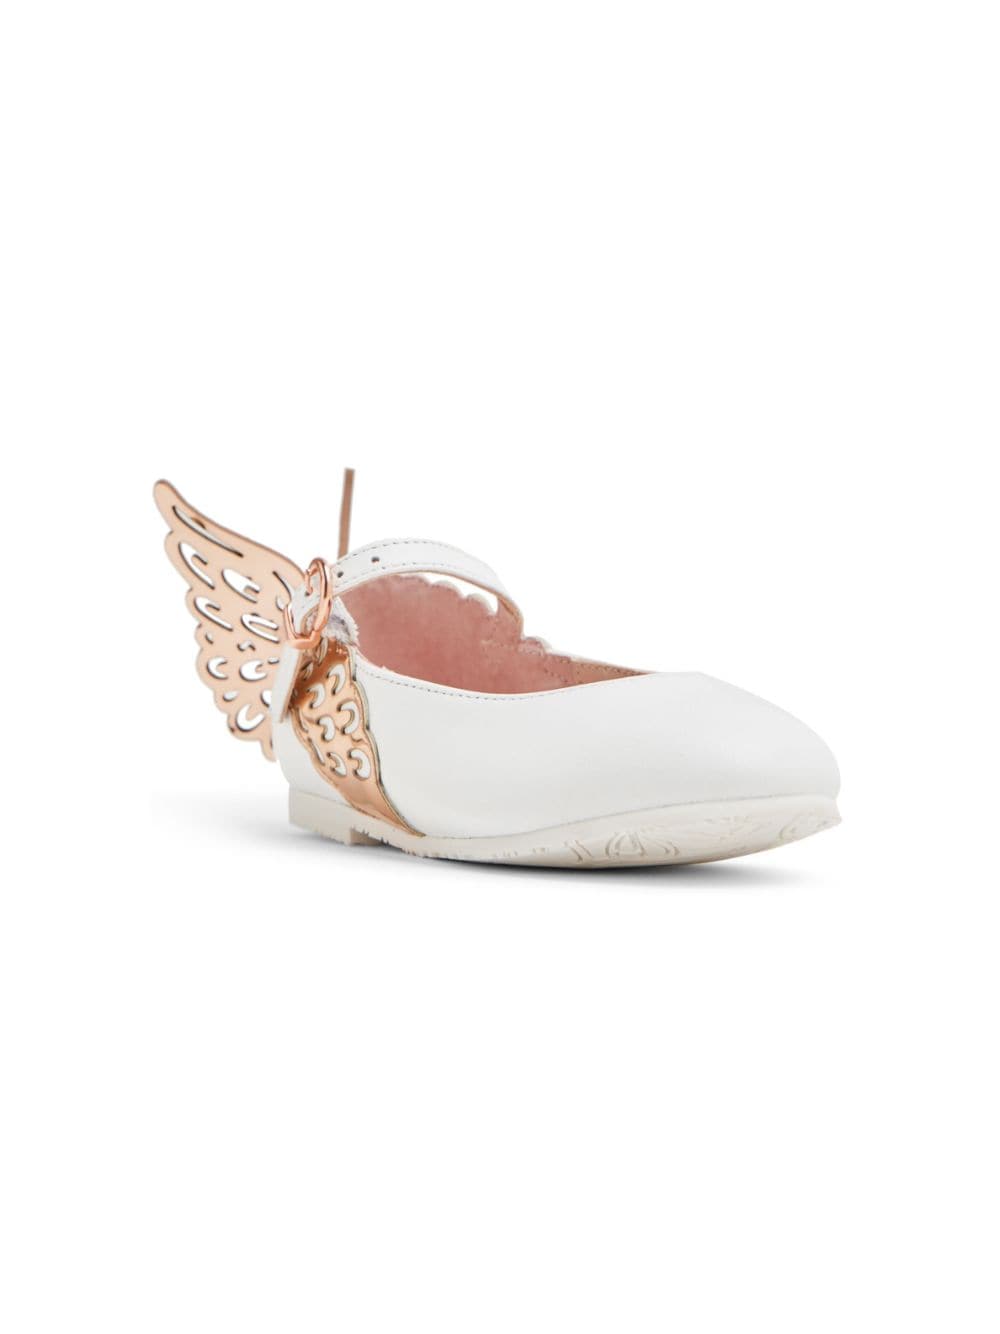 Sophia Webster Mini Evangeline Mini leather ballerina shoes - Neutrals von Sophia Webster Mini